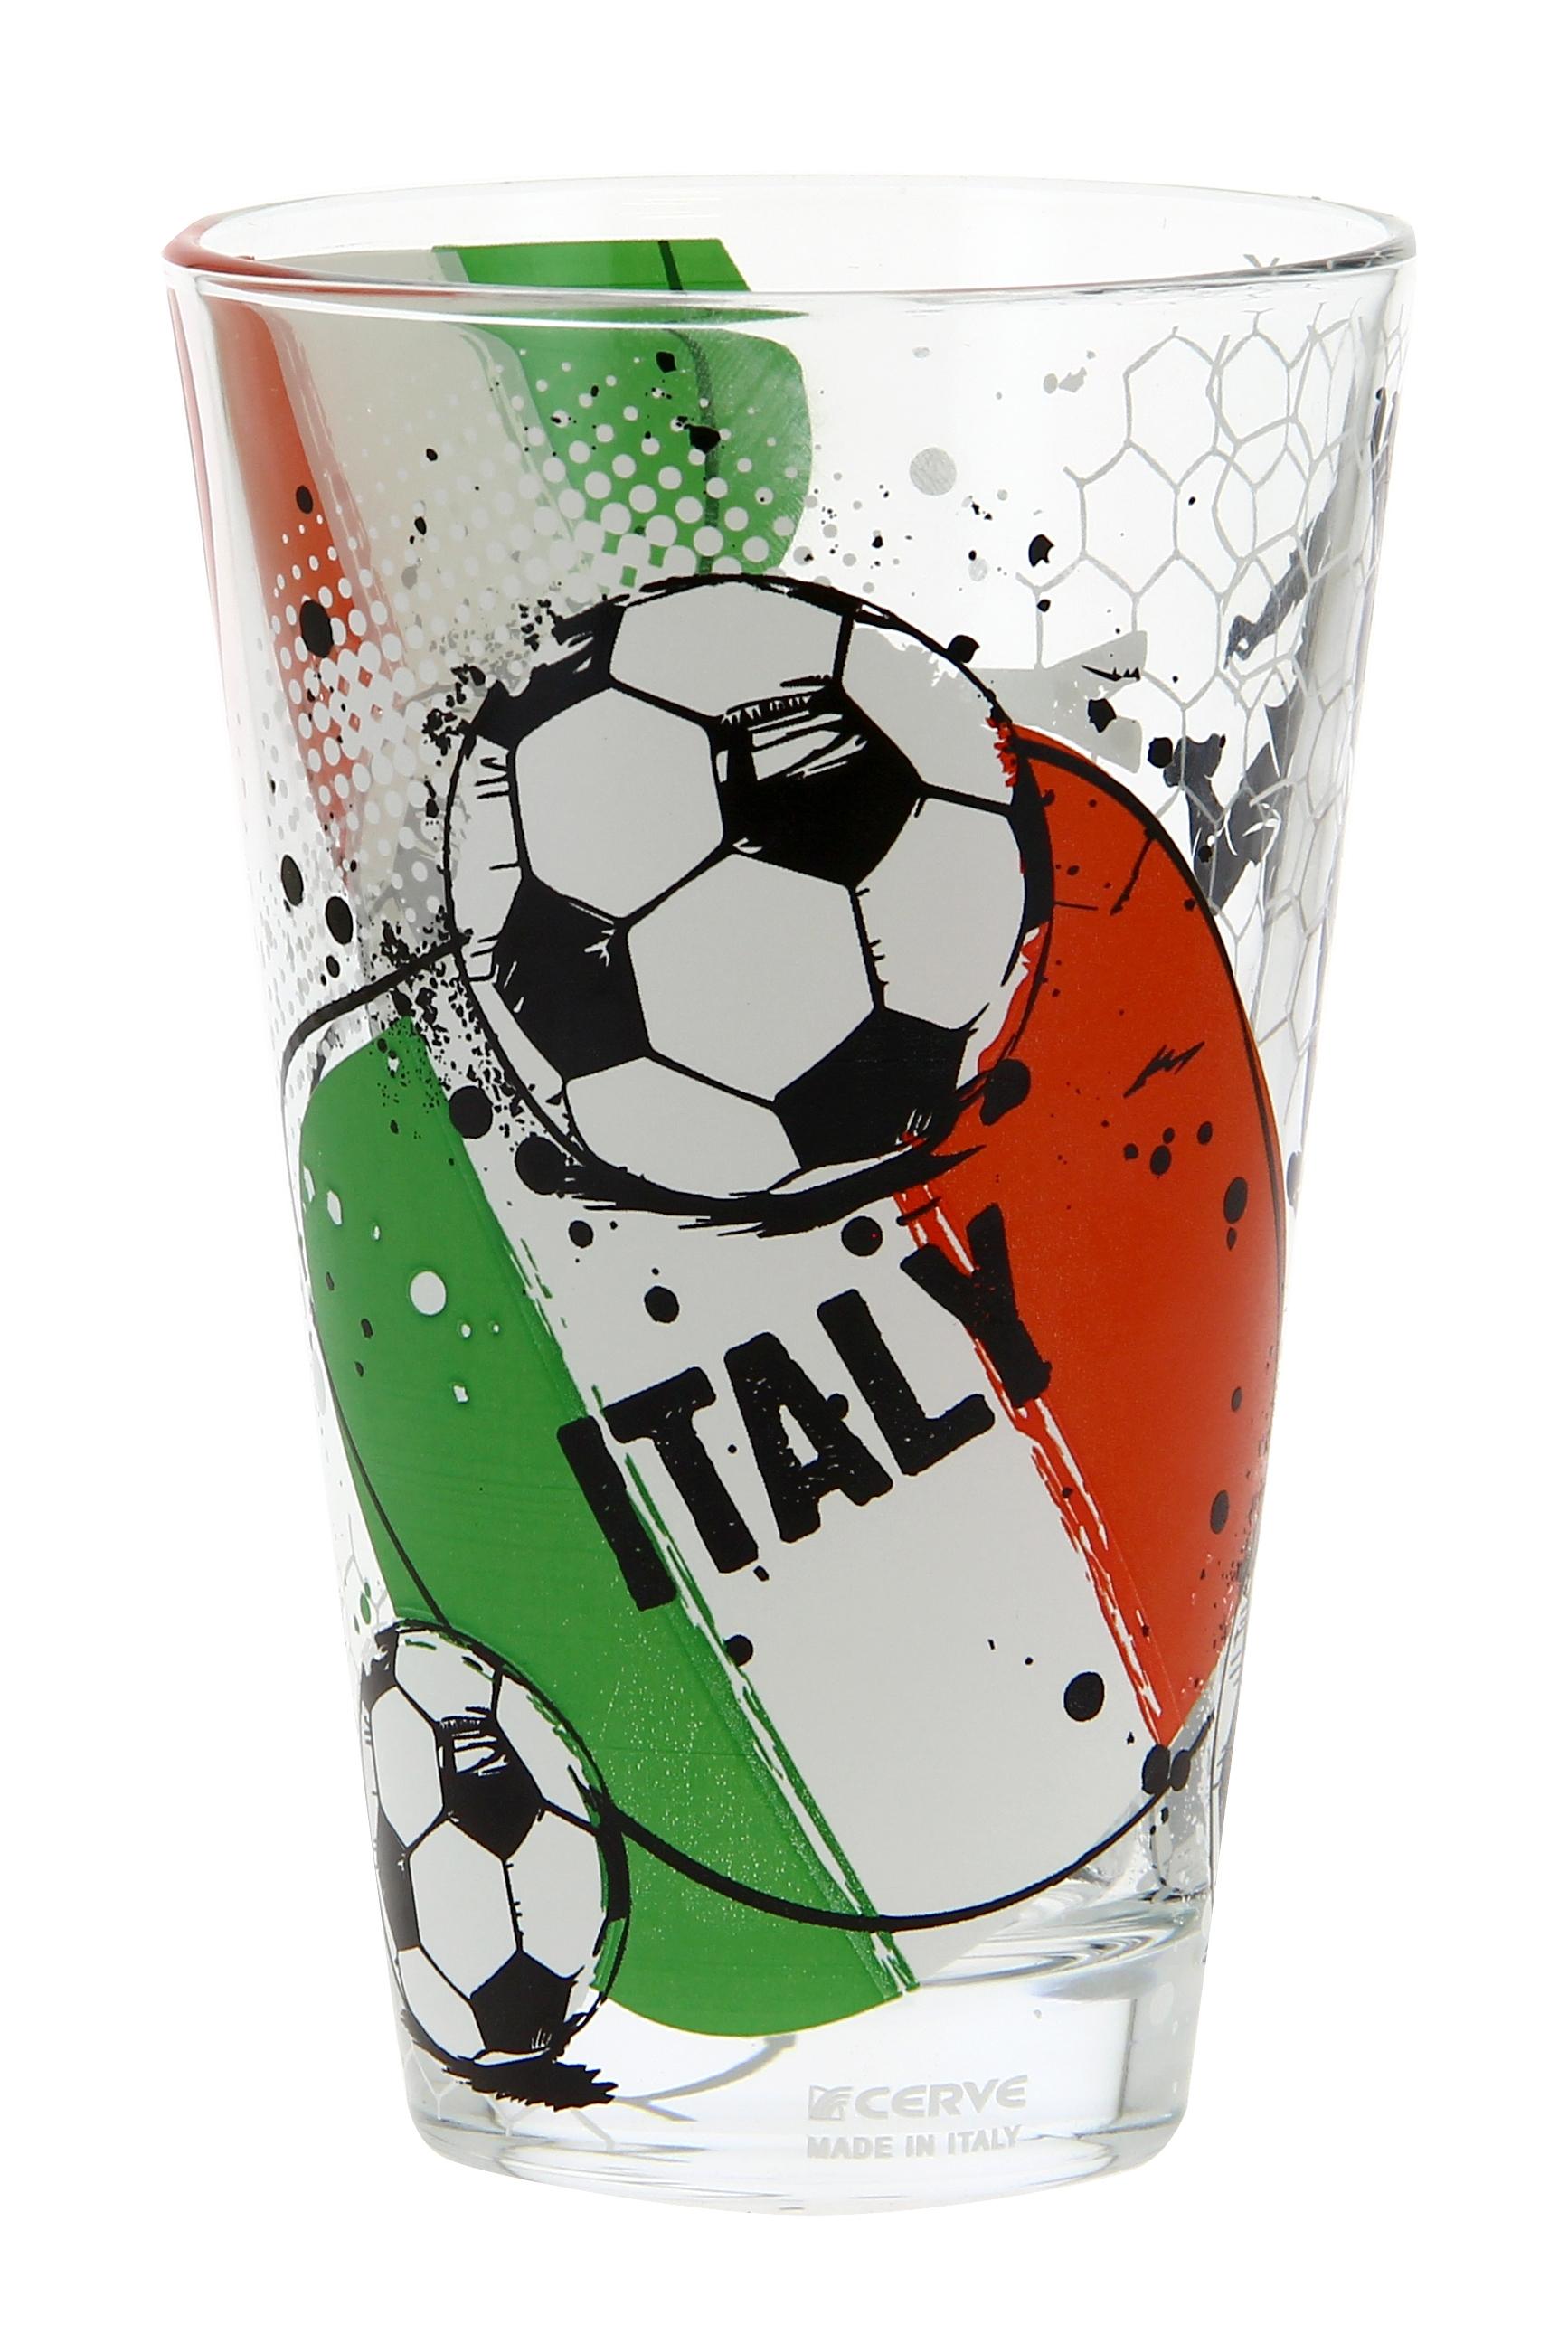 Trinklgas Soccer ca. 310ml - Multicolor, Glas (8/12,4cm) - Modern Living